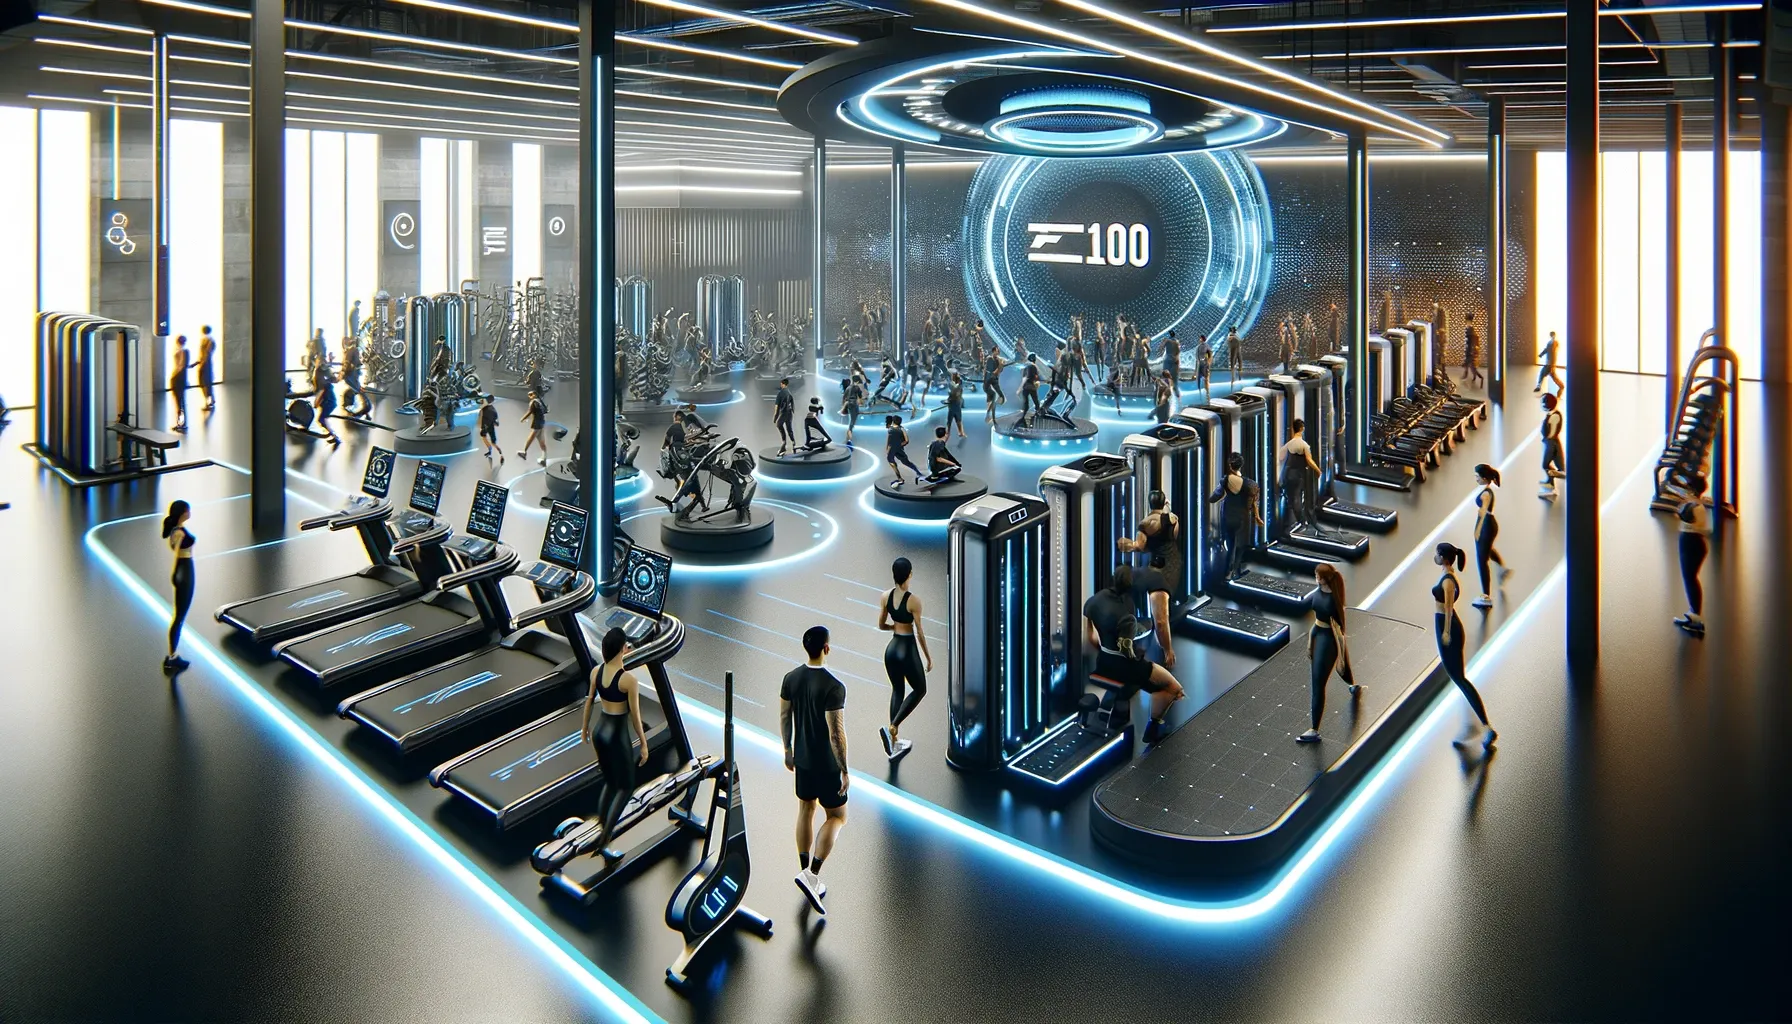 ZTEC100 Tech Fitness